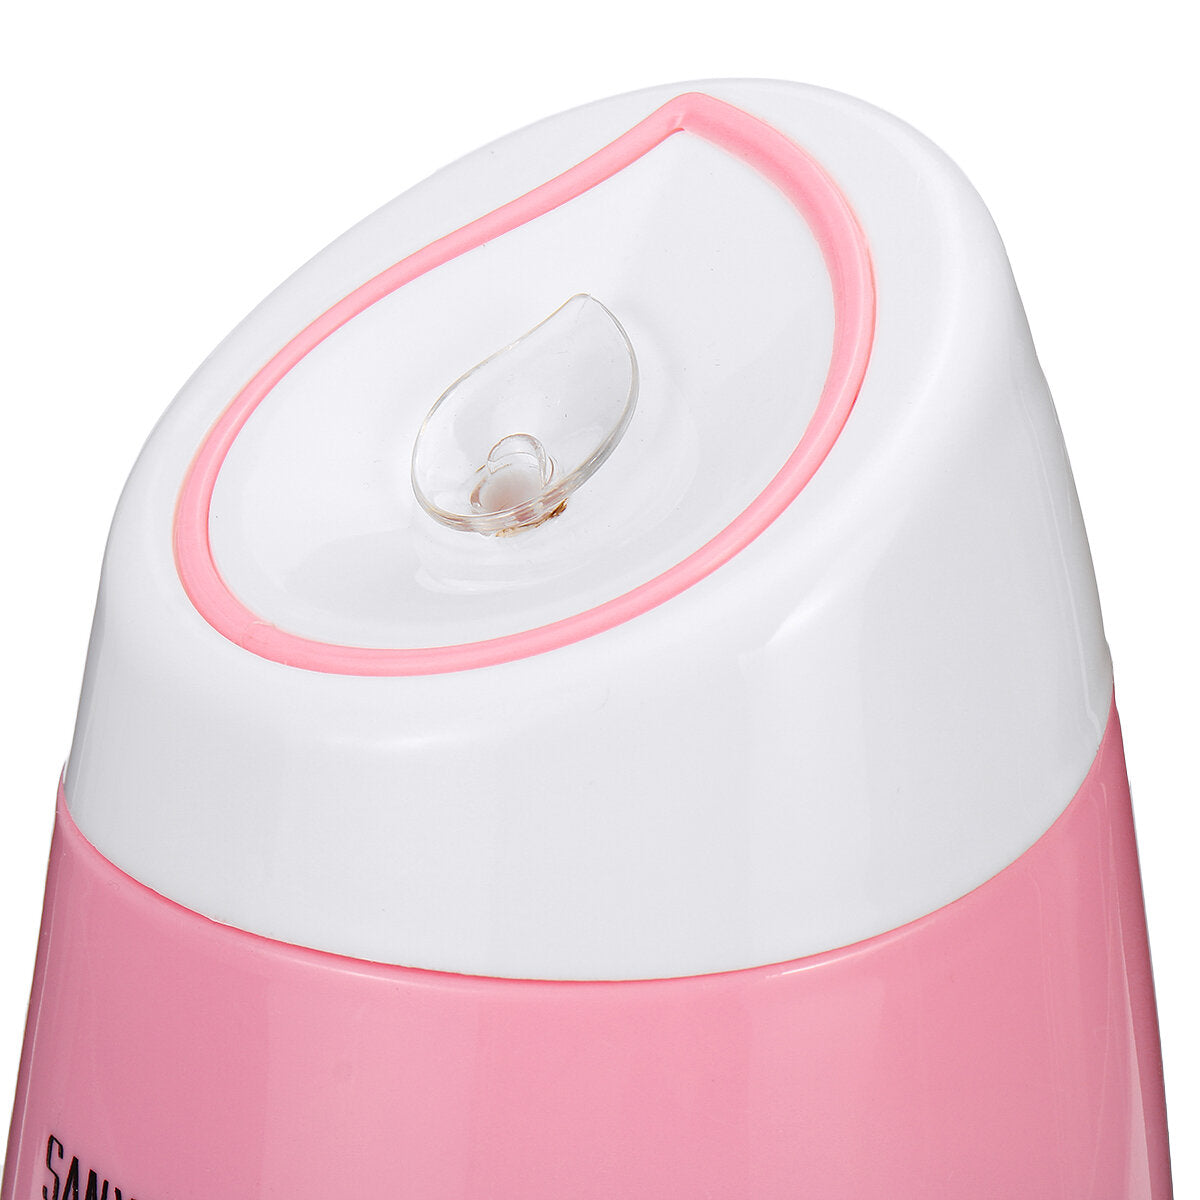 Nano Spray Water Meter Face Steamer Beauty Instrument Household Hot Spray Steaming Humidifier 220V